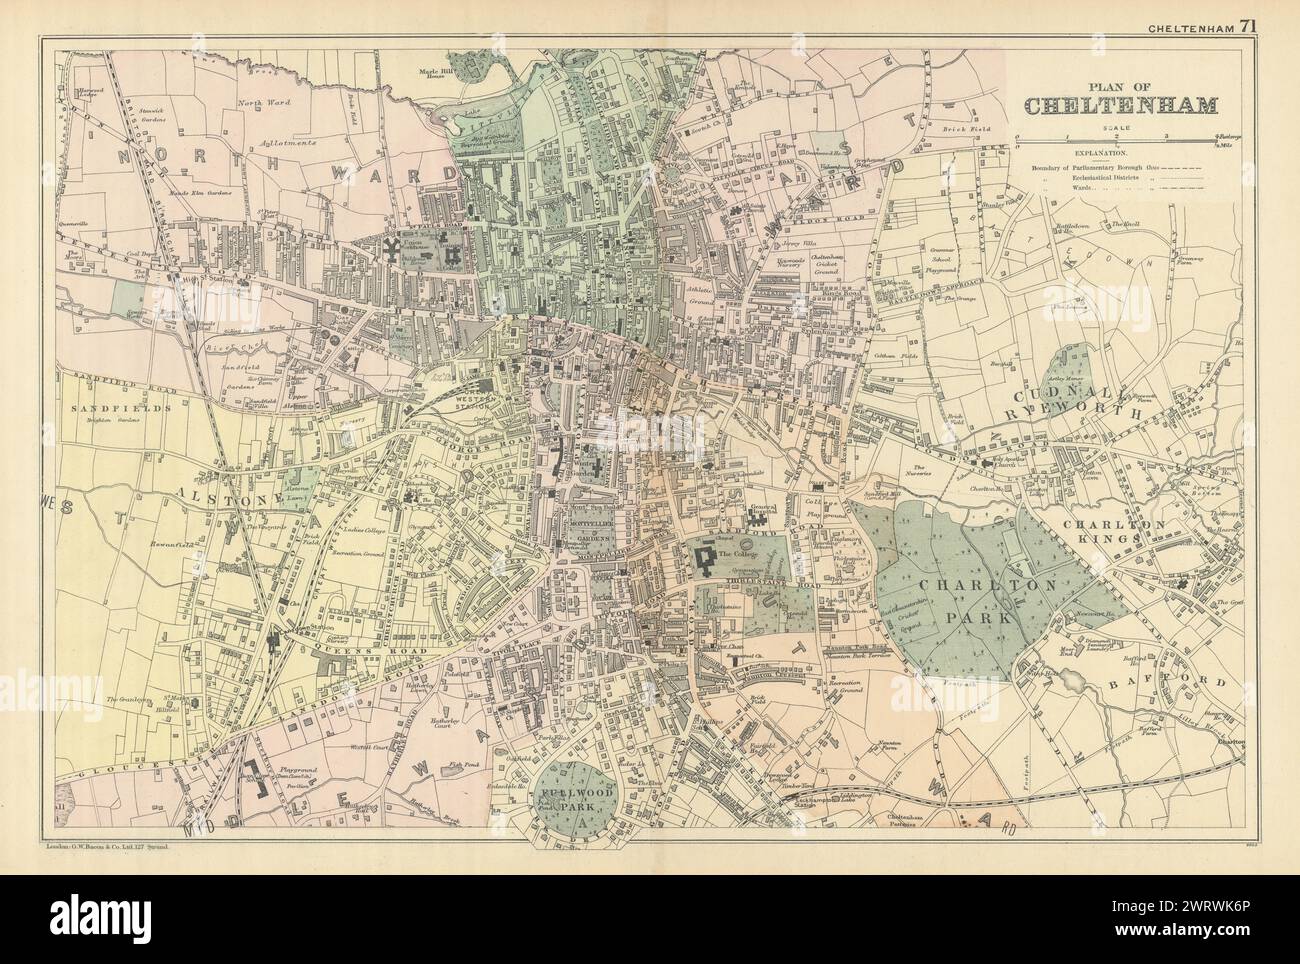 CHELTENHAM Montpellier St. Pauls antique town city plan GW BACON 1898 old map Stock Photo